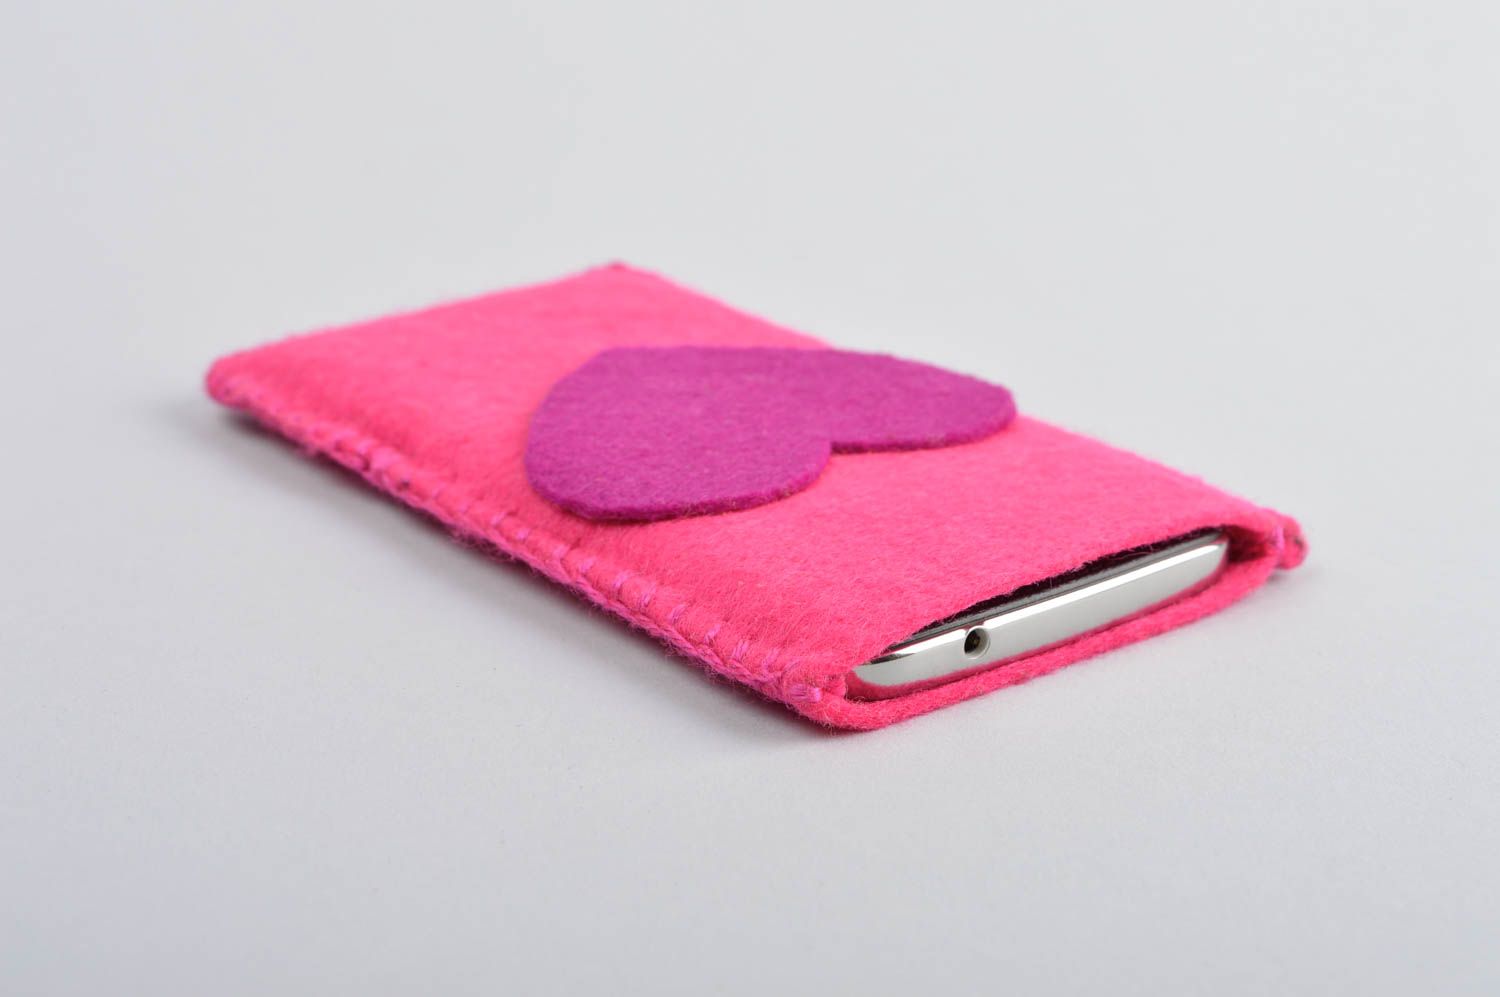 Stylish handmade felt phone case gadget accessories cell phone case ideas photo 4